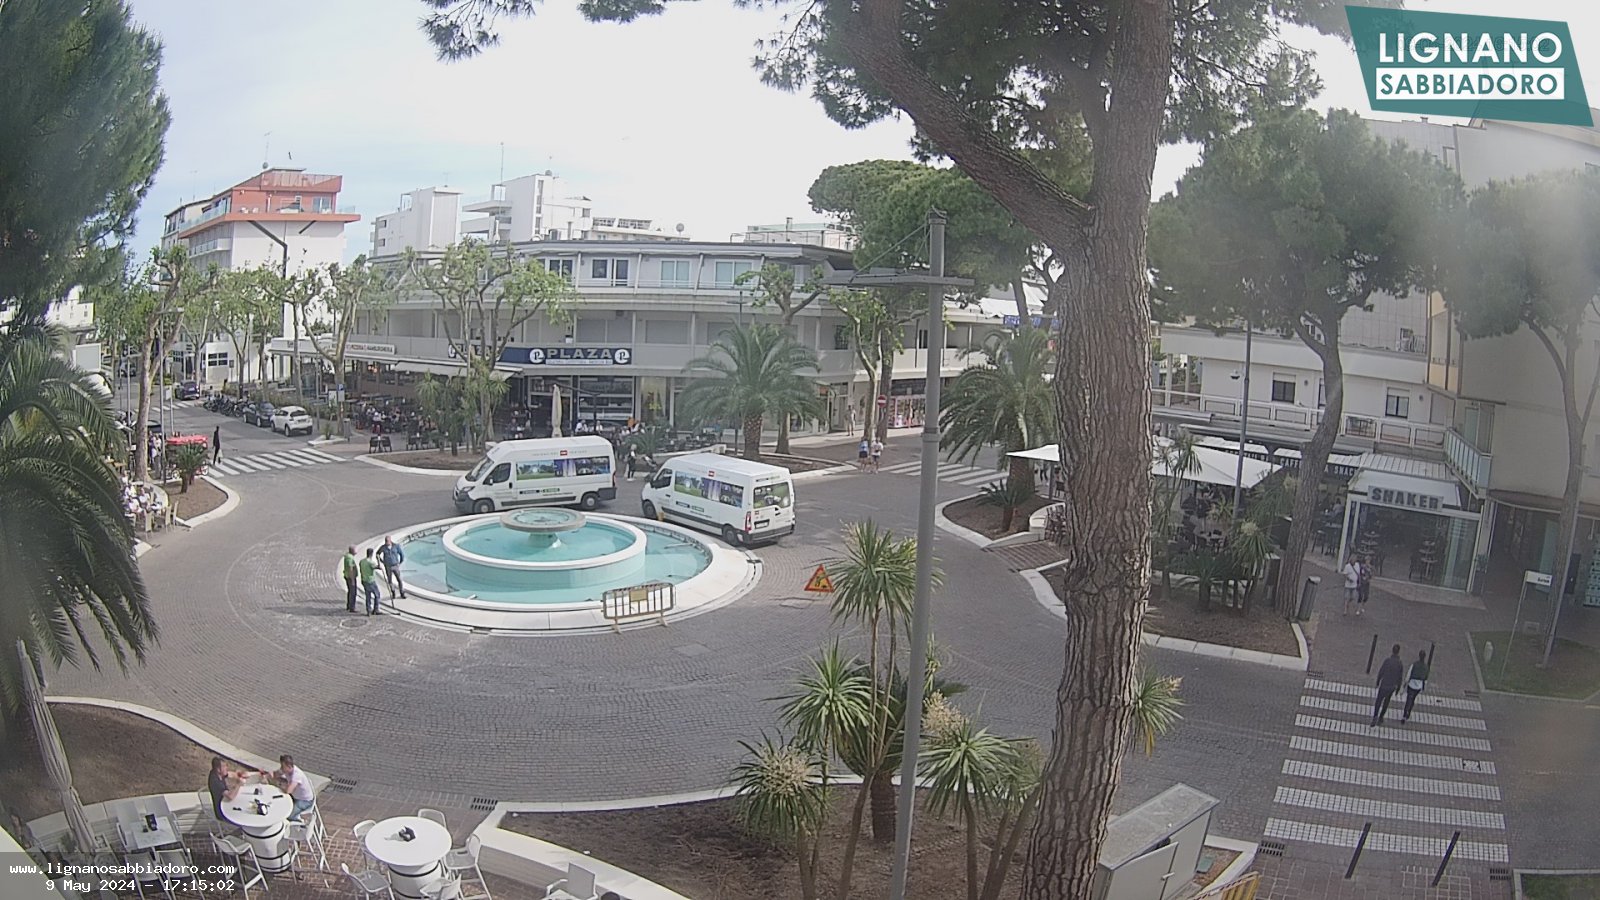 Webcam a Lignano Sabbiadoro con vista su piazza fontana e centro storico